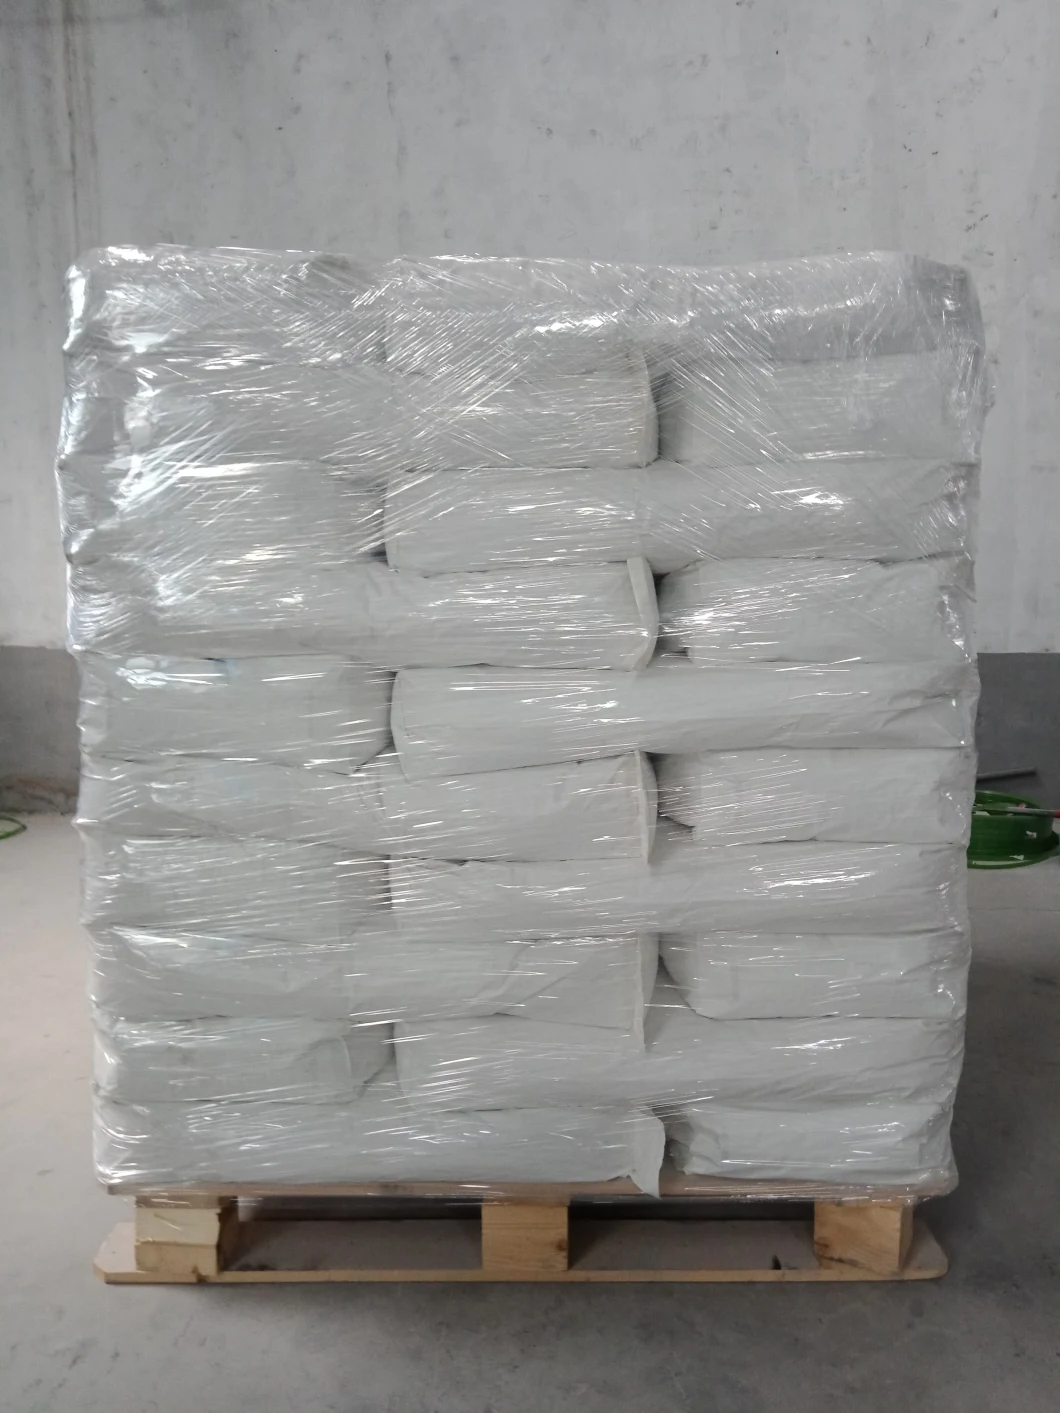 Vinyl Acetate Ethylene Polymer Powder Gypsum and Cement Based Adhesive Mortar Bond Additive Rdp